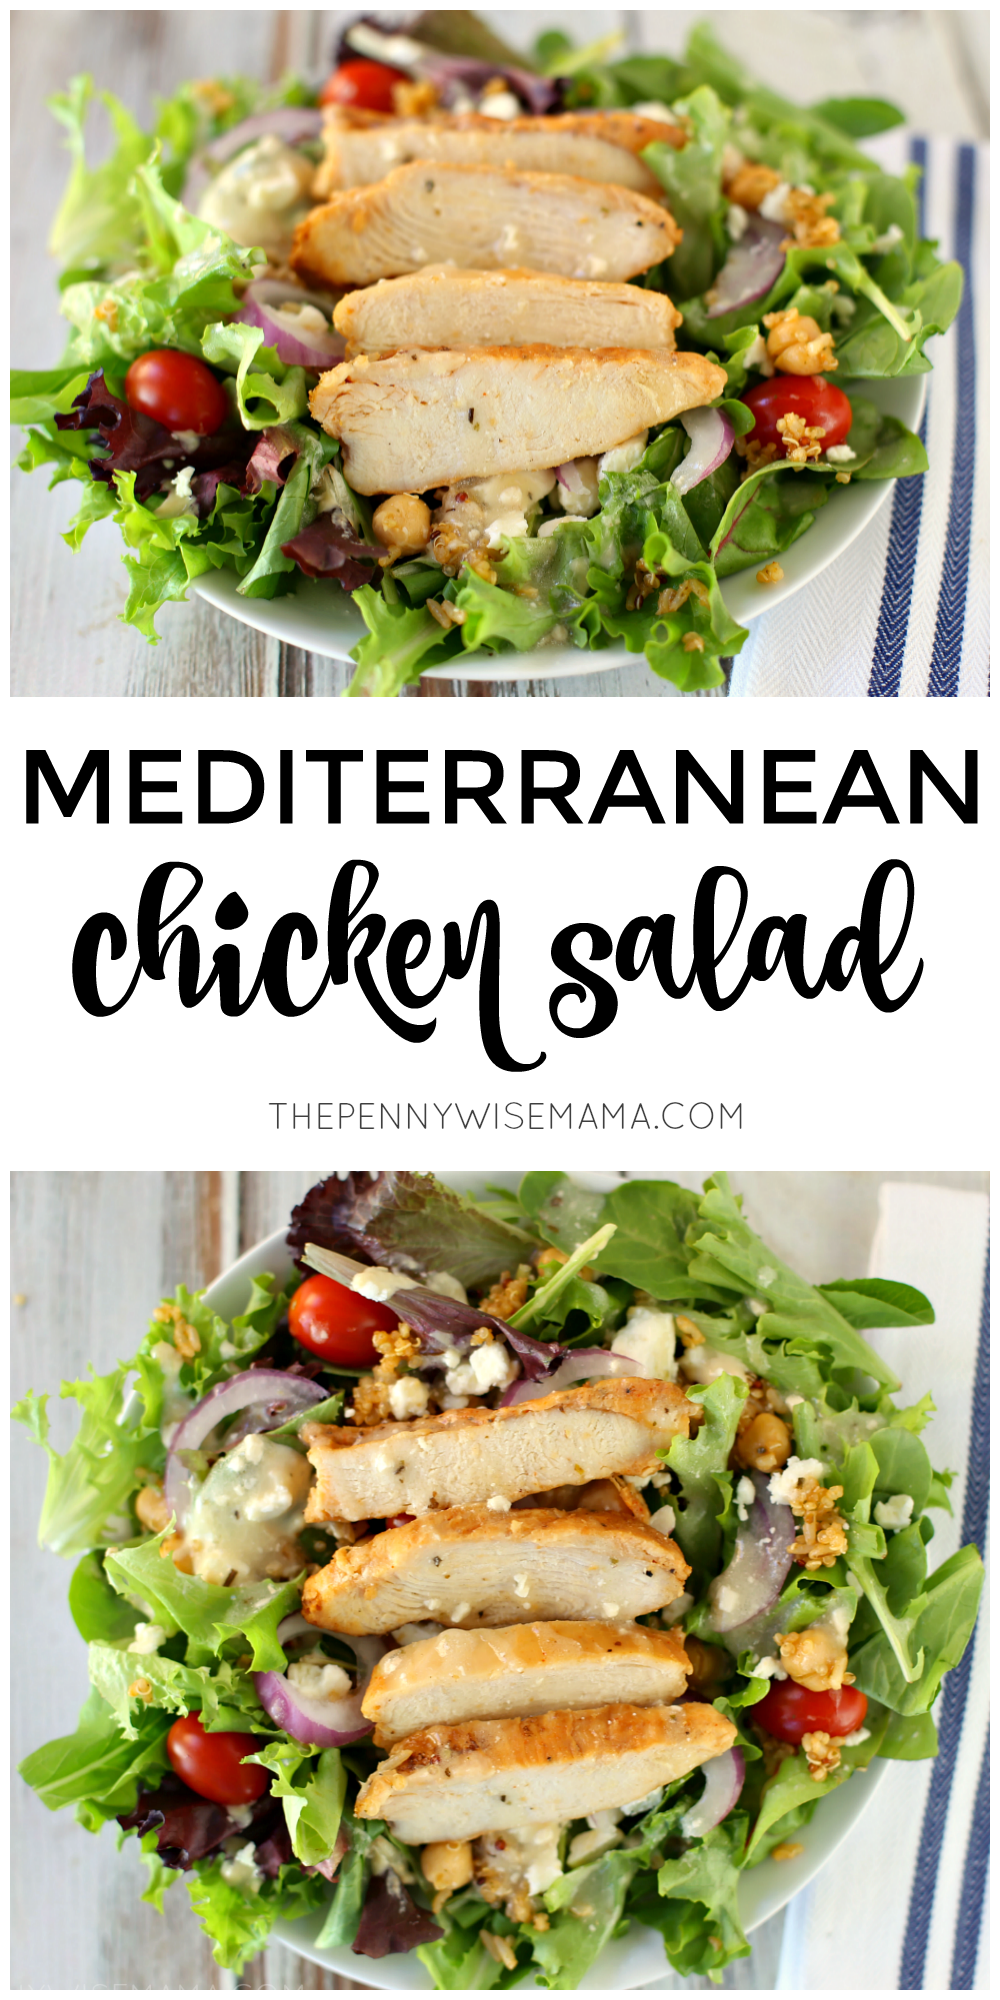 Mediterranean Chicken Salad - healthy, delicious and full of flavor!